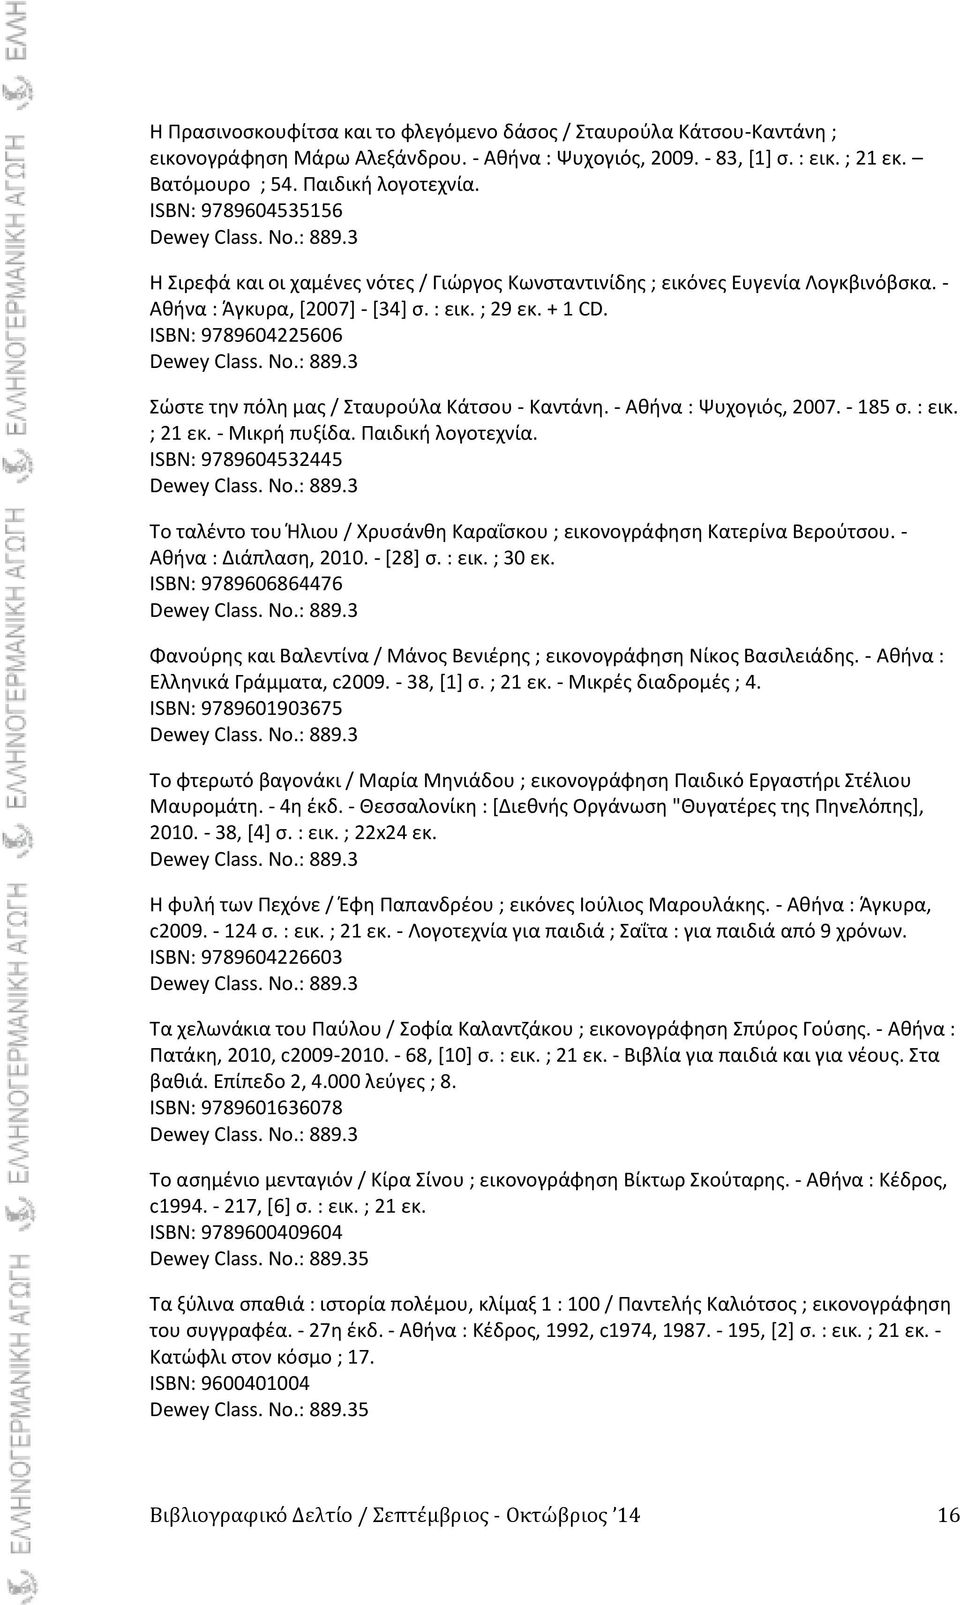 ISBN: 9789604225606 Σϊςτε τθν πόλθ μασ / Σταυροφλα Κάτςου - Καντάνθ. - Ακινα : Ψυχογιόσ, 2007. - 185 ς. : εικ. ; 21 εκ. - Μικρι πυξίδα. Ραιδικι λογοτεχνία.